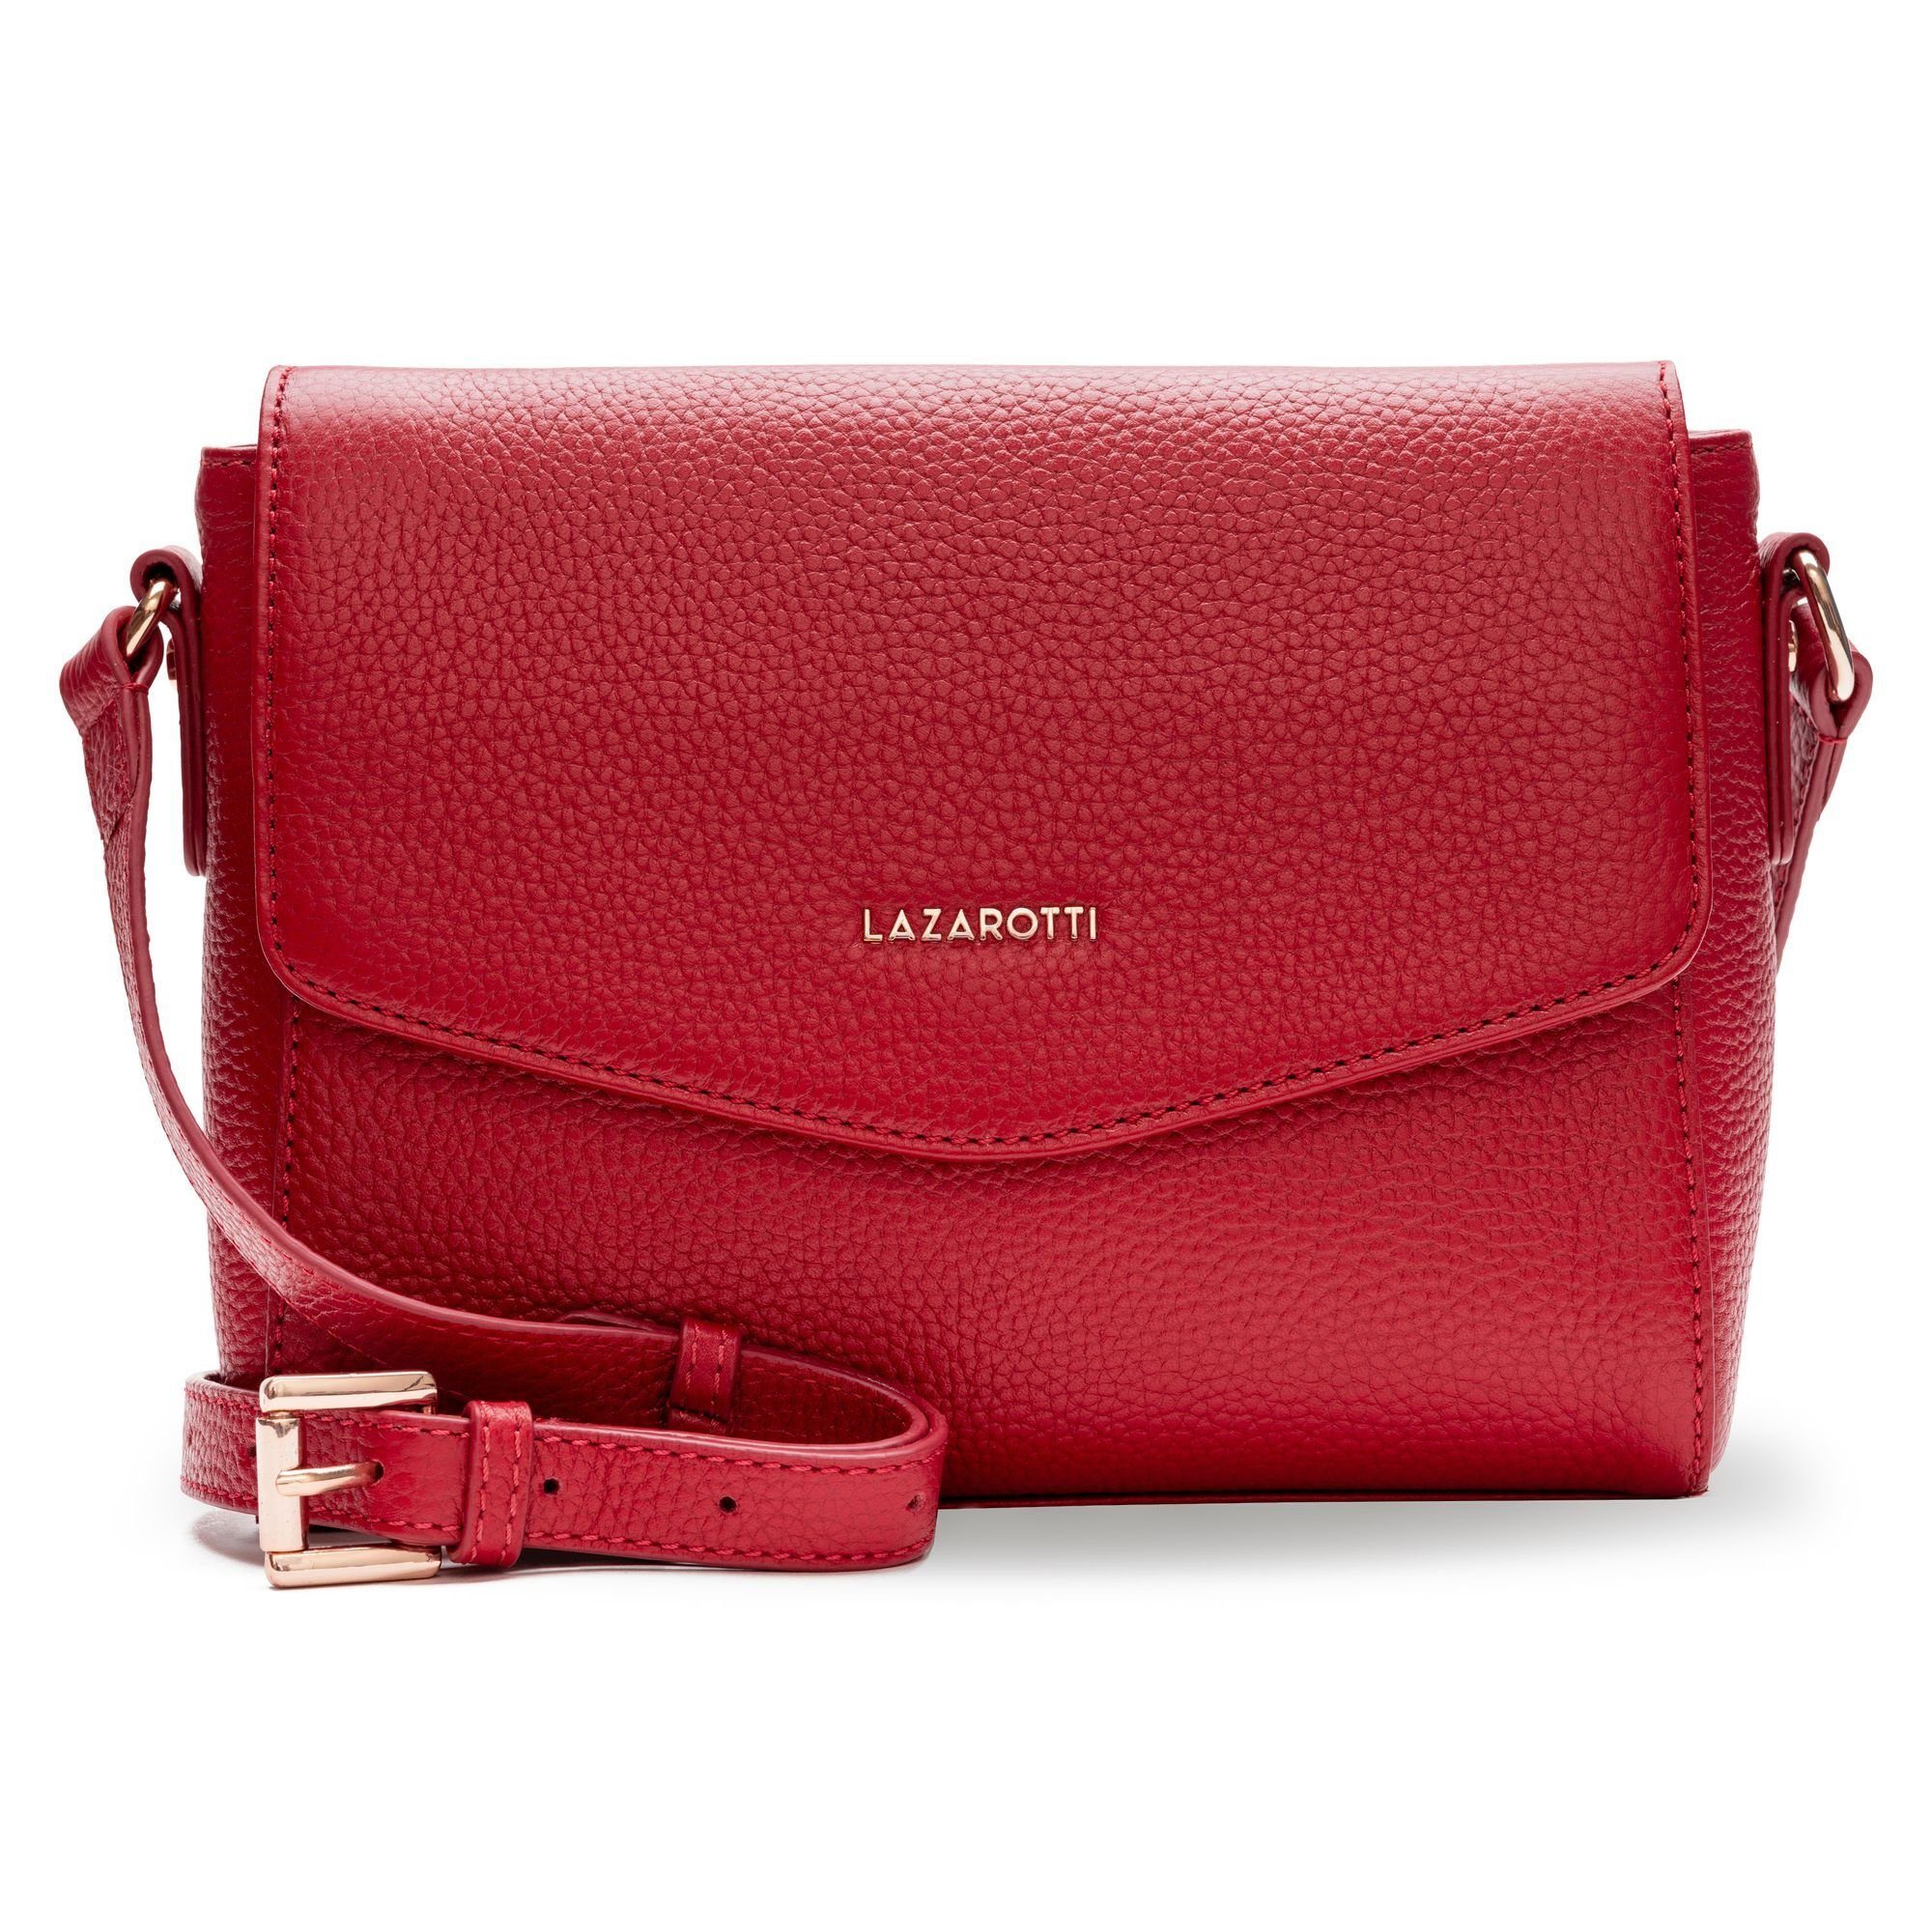 Lazarotti Umhängetasche Bologna Leather, Leder red